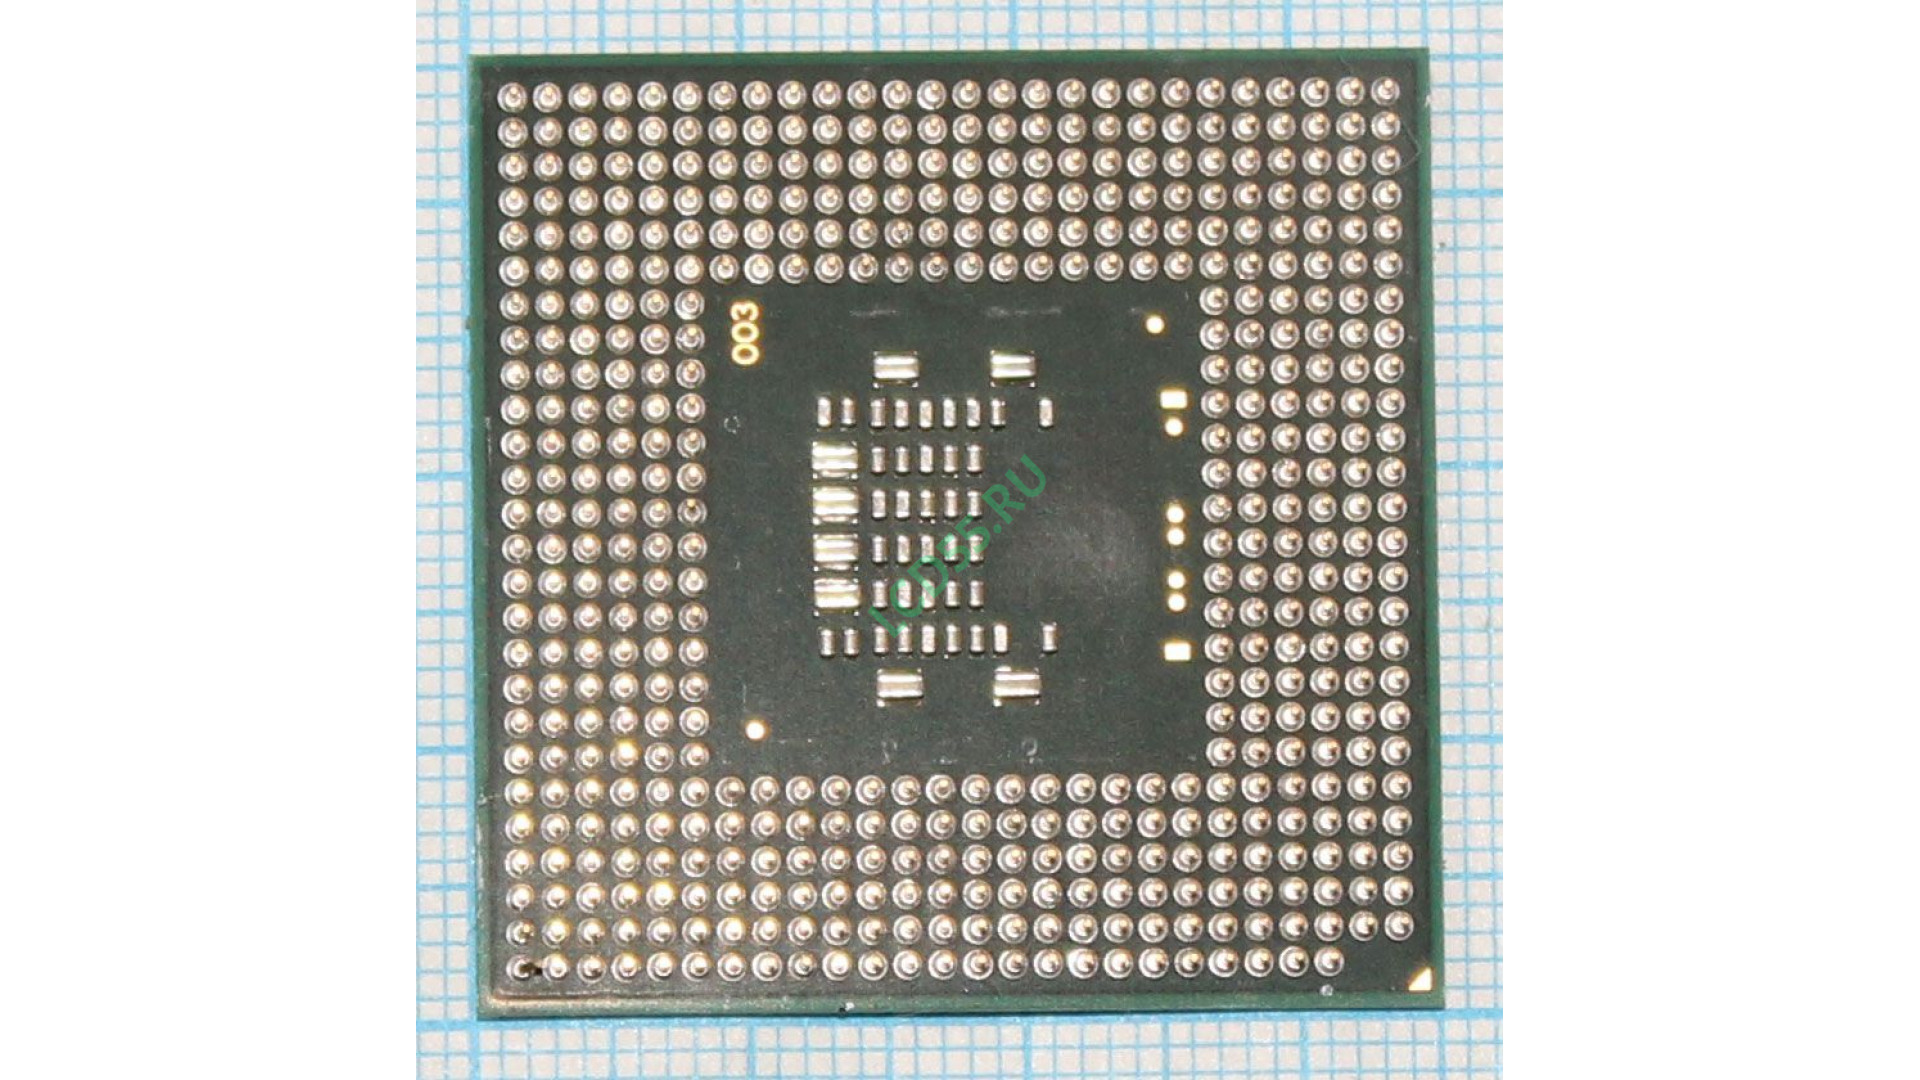 Intel Pentium Processor T2390 (SLA4H) (1M Cache, 1.86 GHz, 533, 533 MHz FSB)